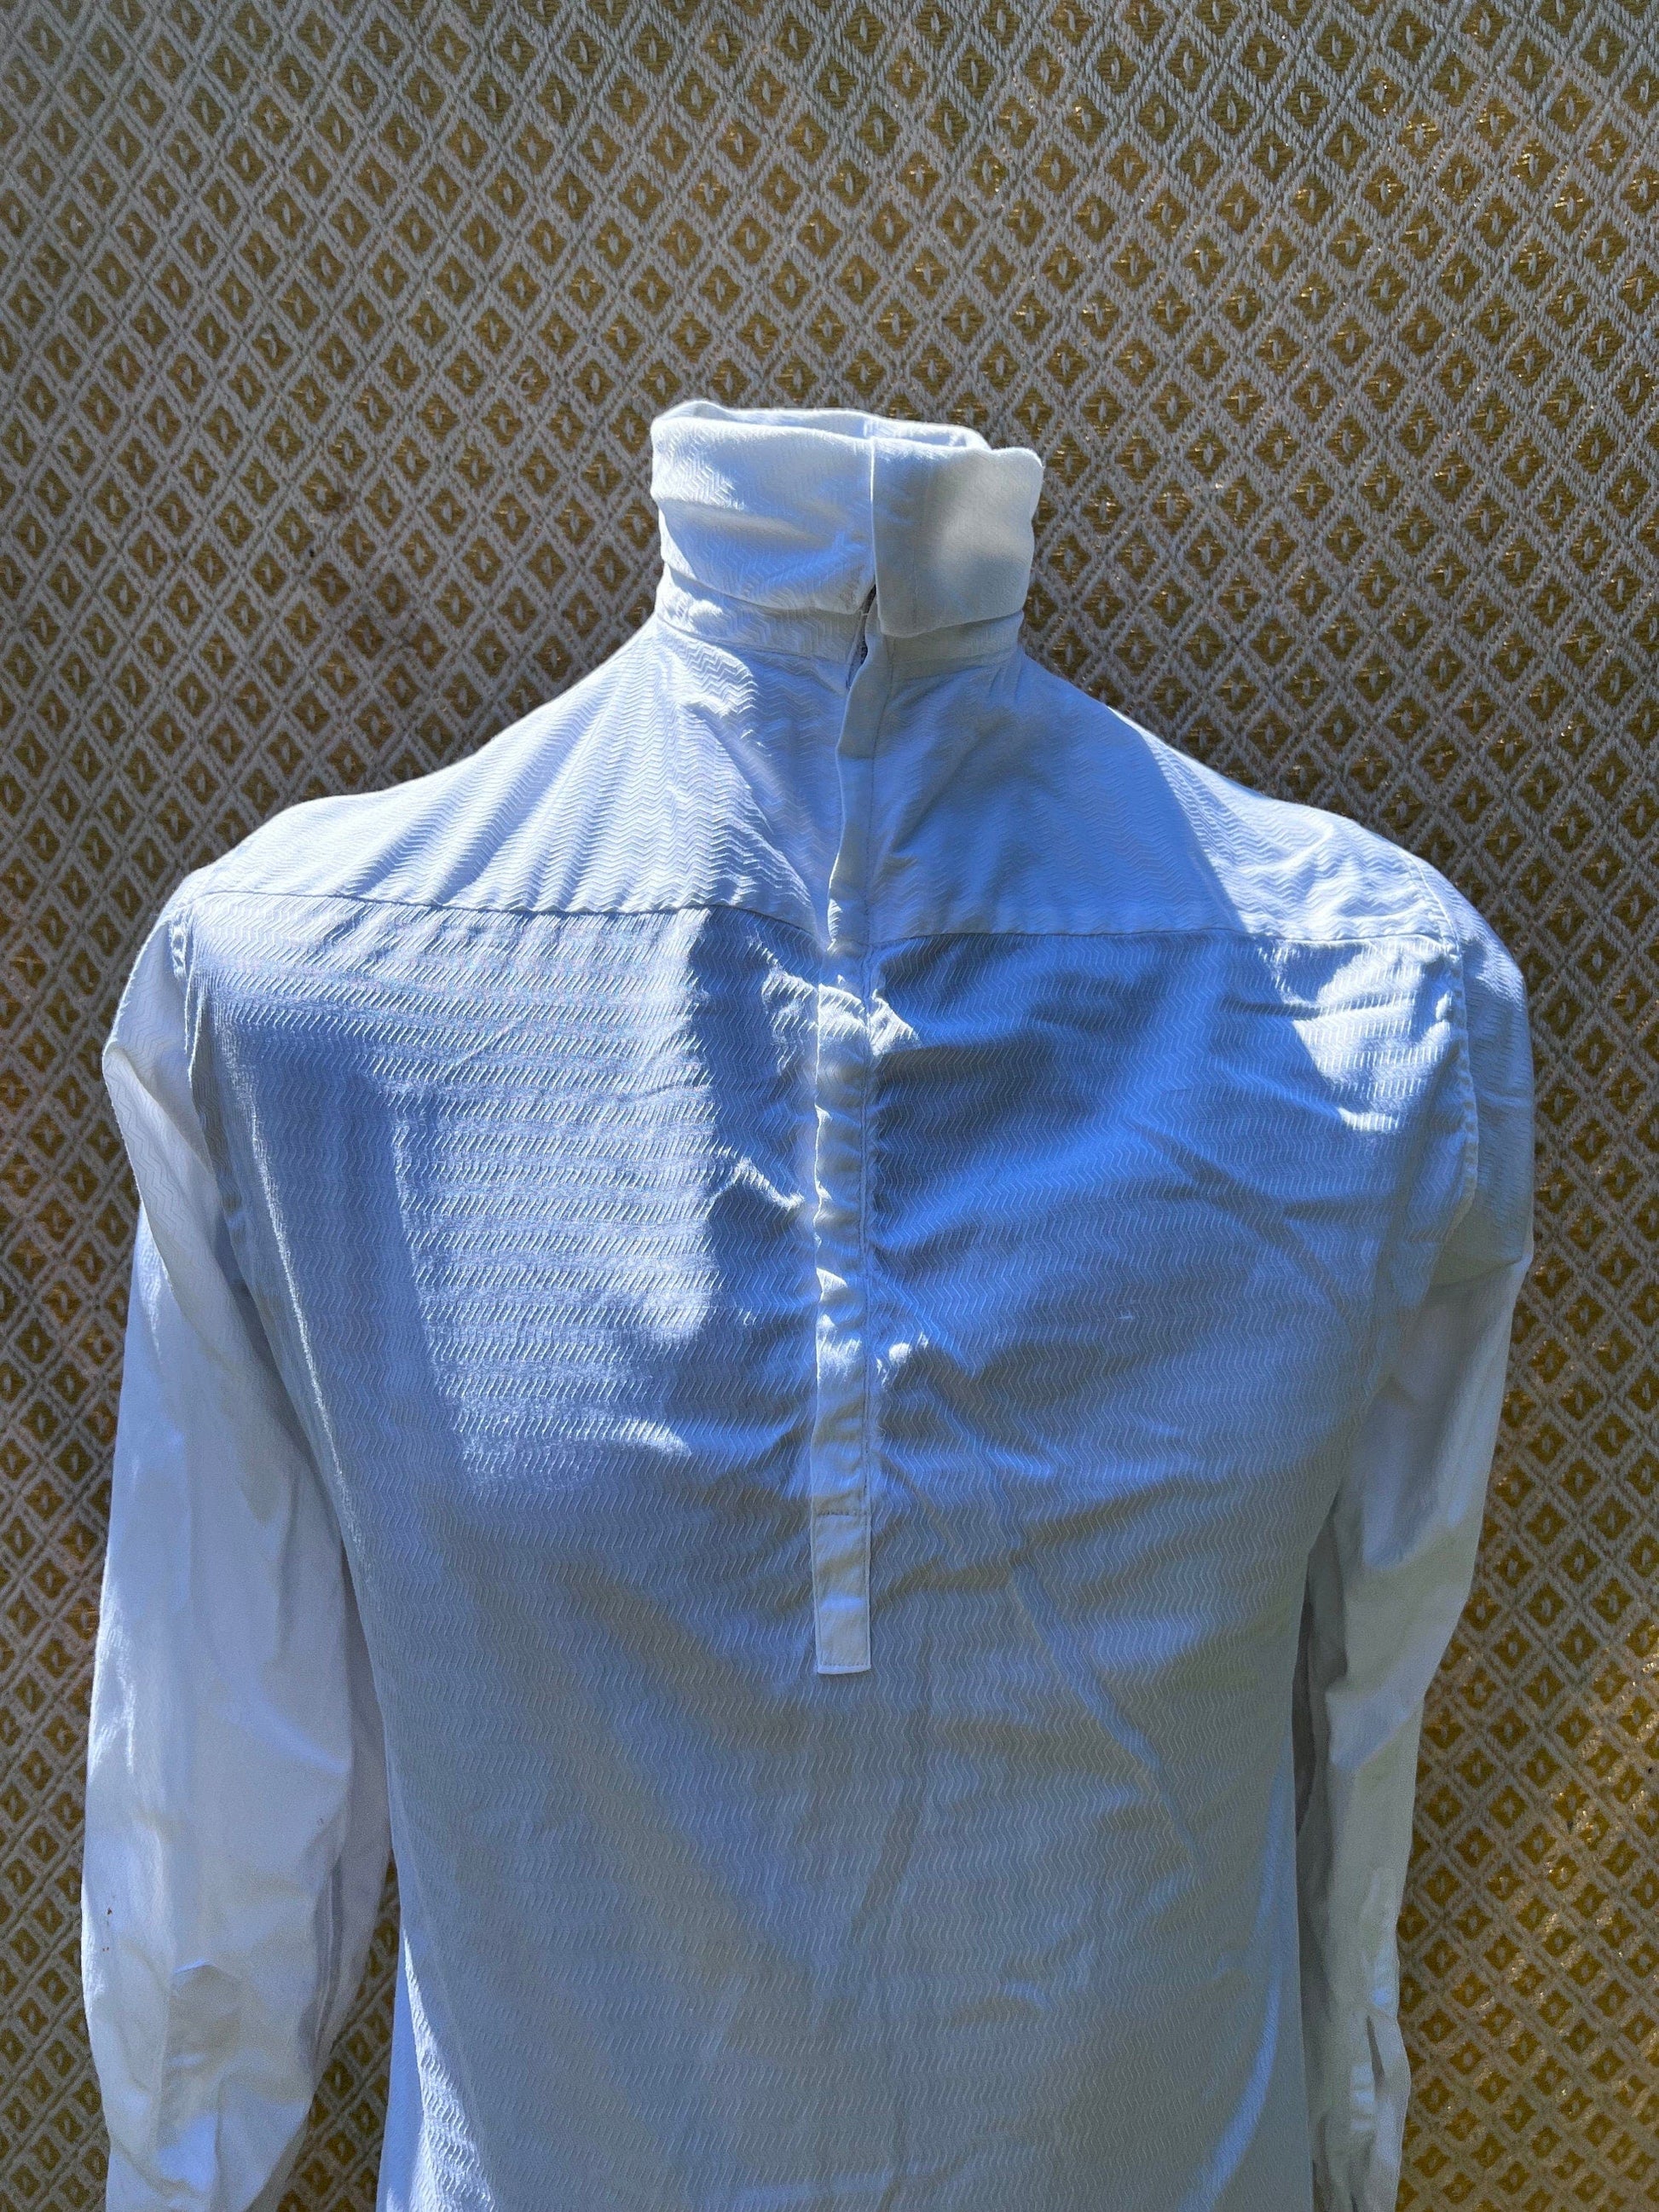 Vintage 1960s Turtle Neck S Turnbull & Asser White Cotton Shirt, vintage shirt, vintage shirt, men’s silk shirt The Original Turnbull Turtle